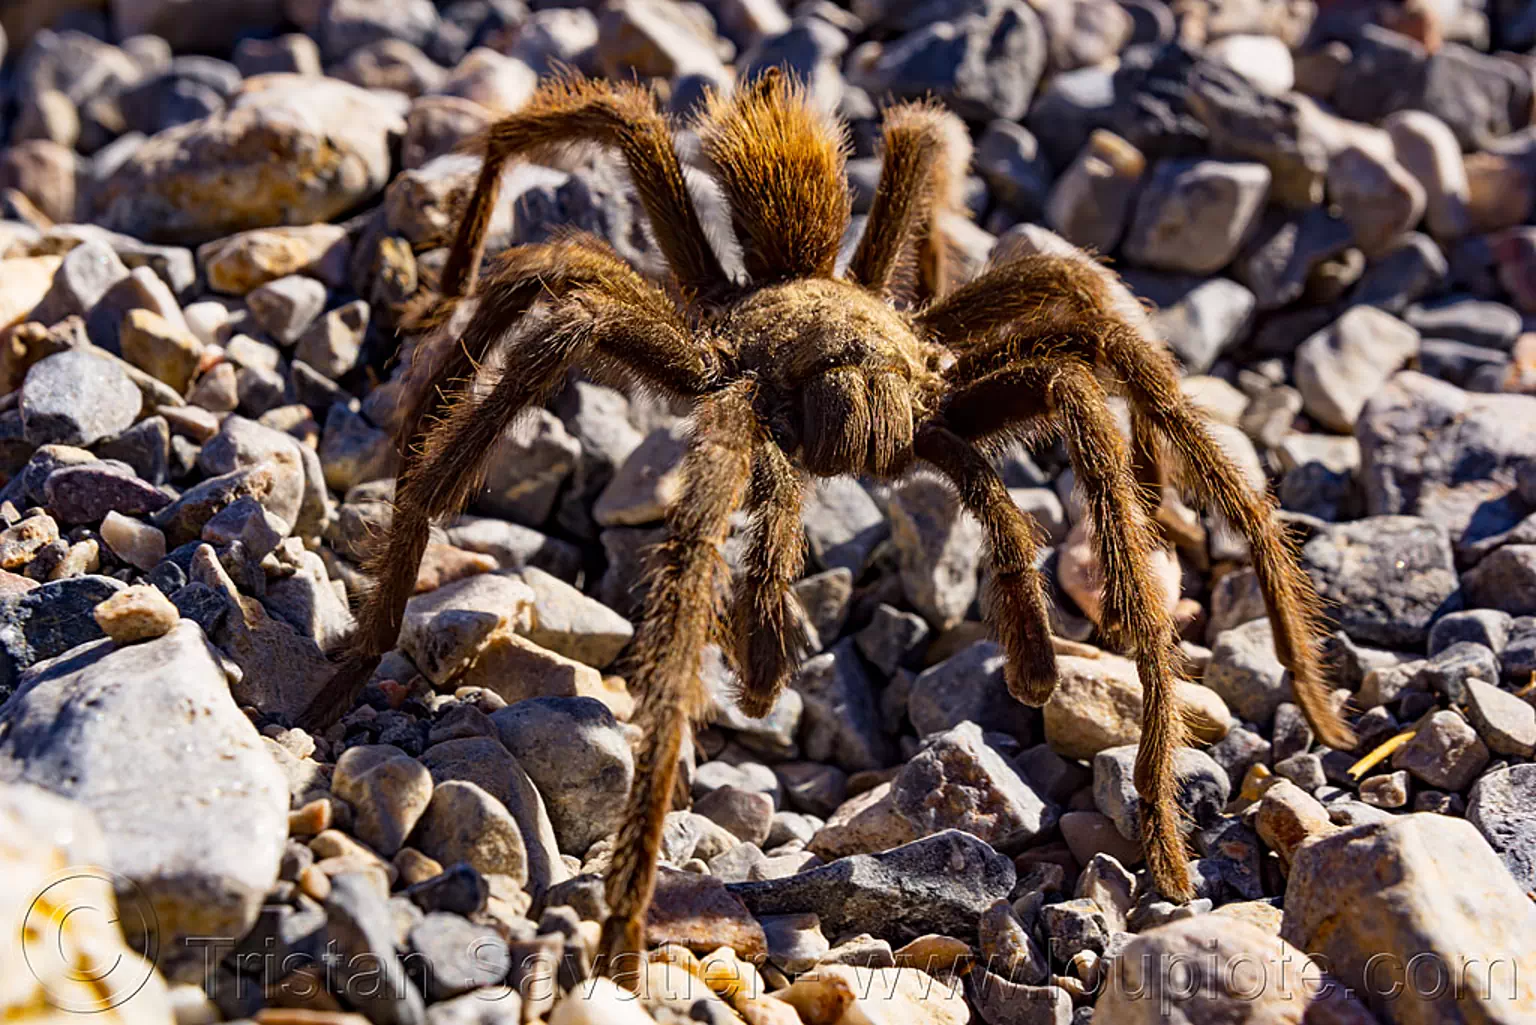 brown tarantula spider close-up (death valley), brown, close-up, death valley, grotto canyon, spider, tarantula, wildlife